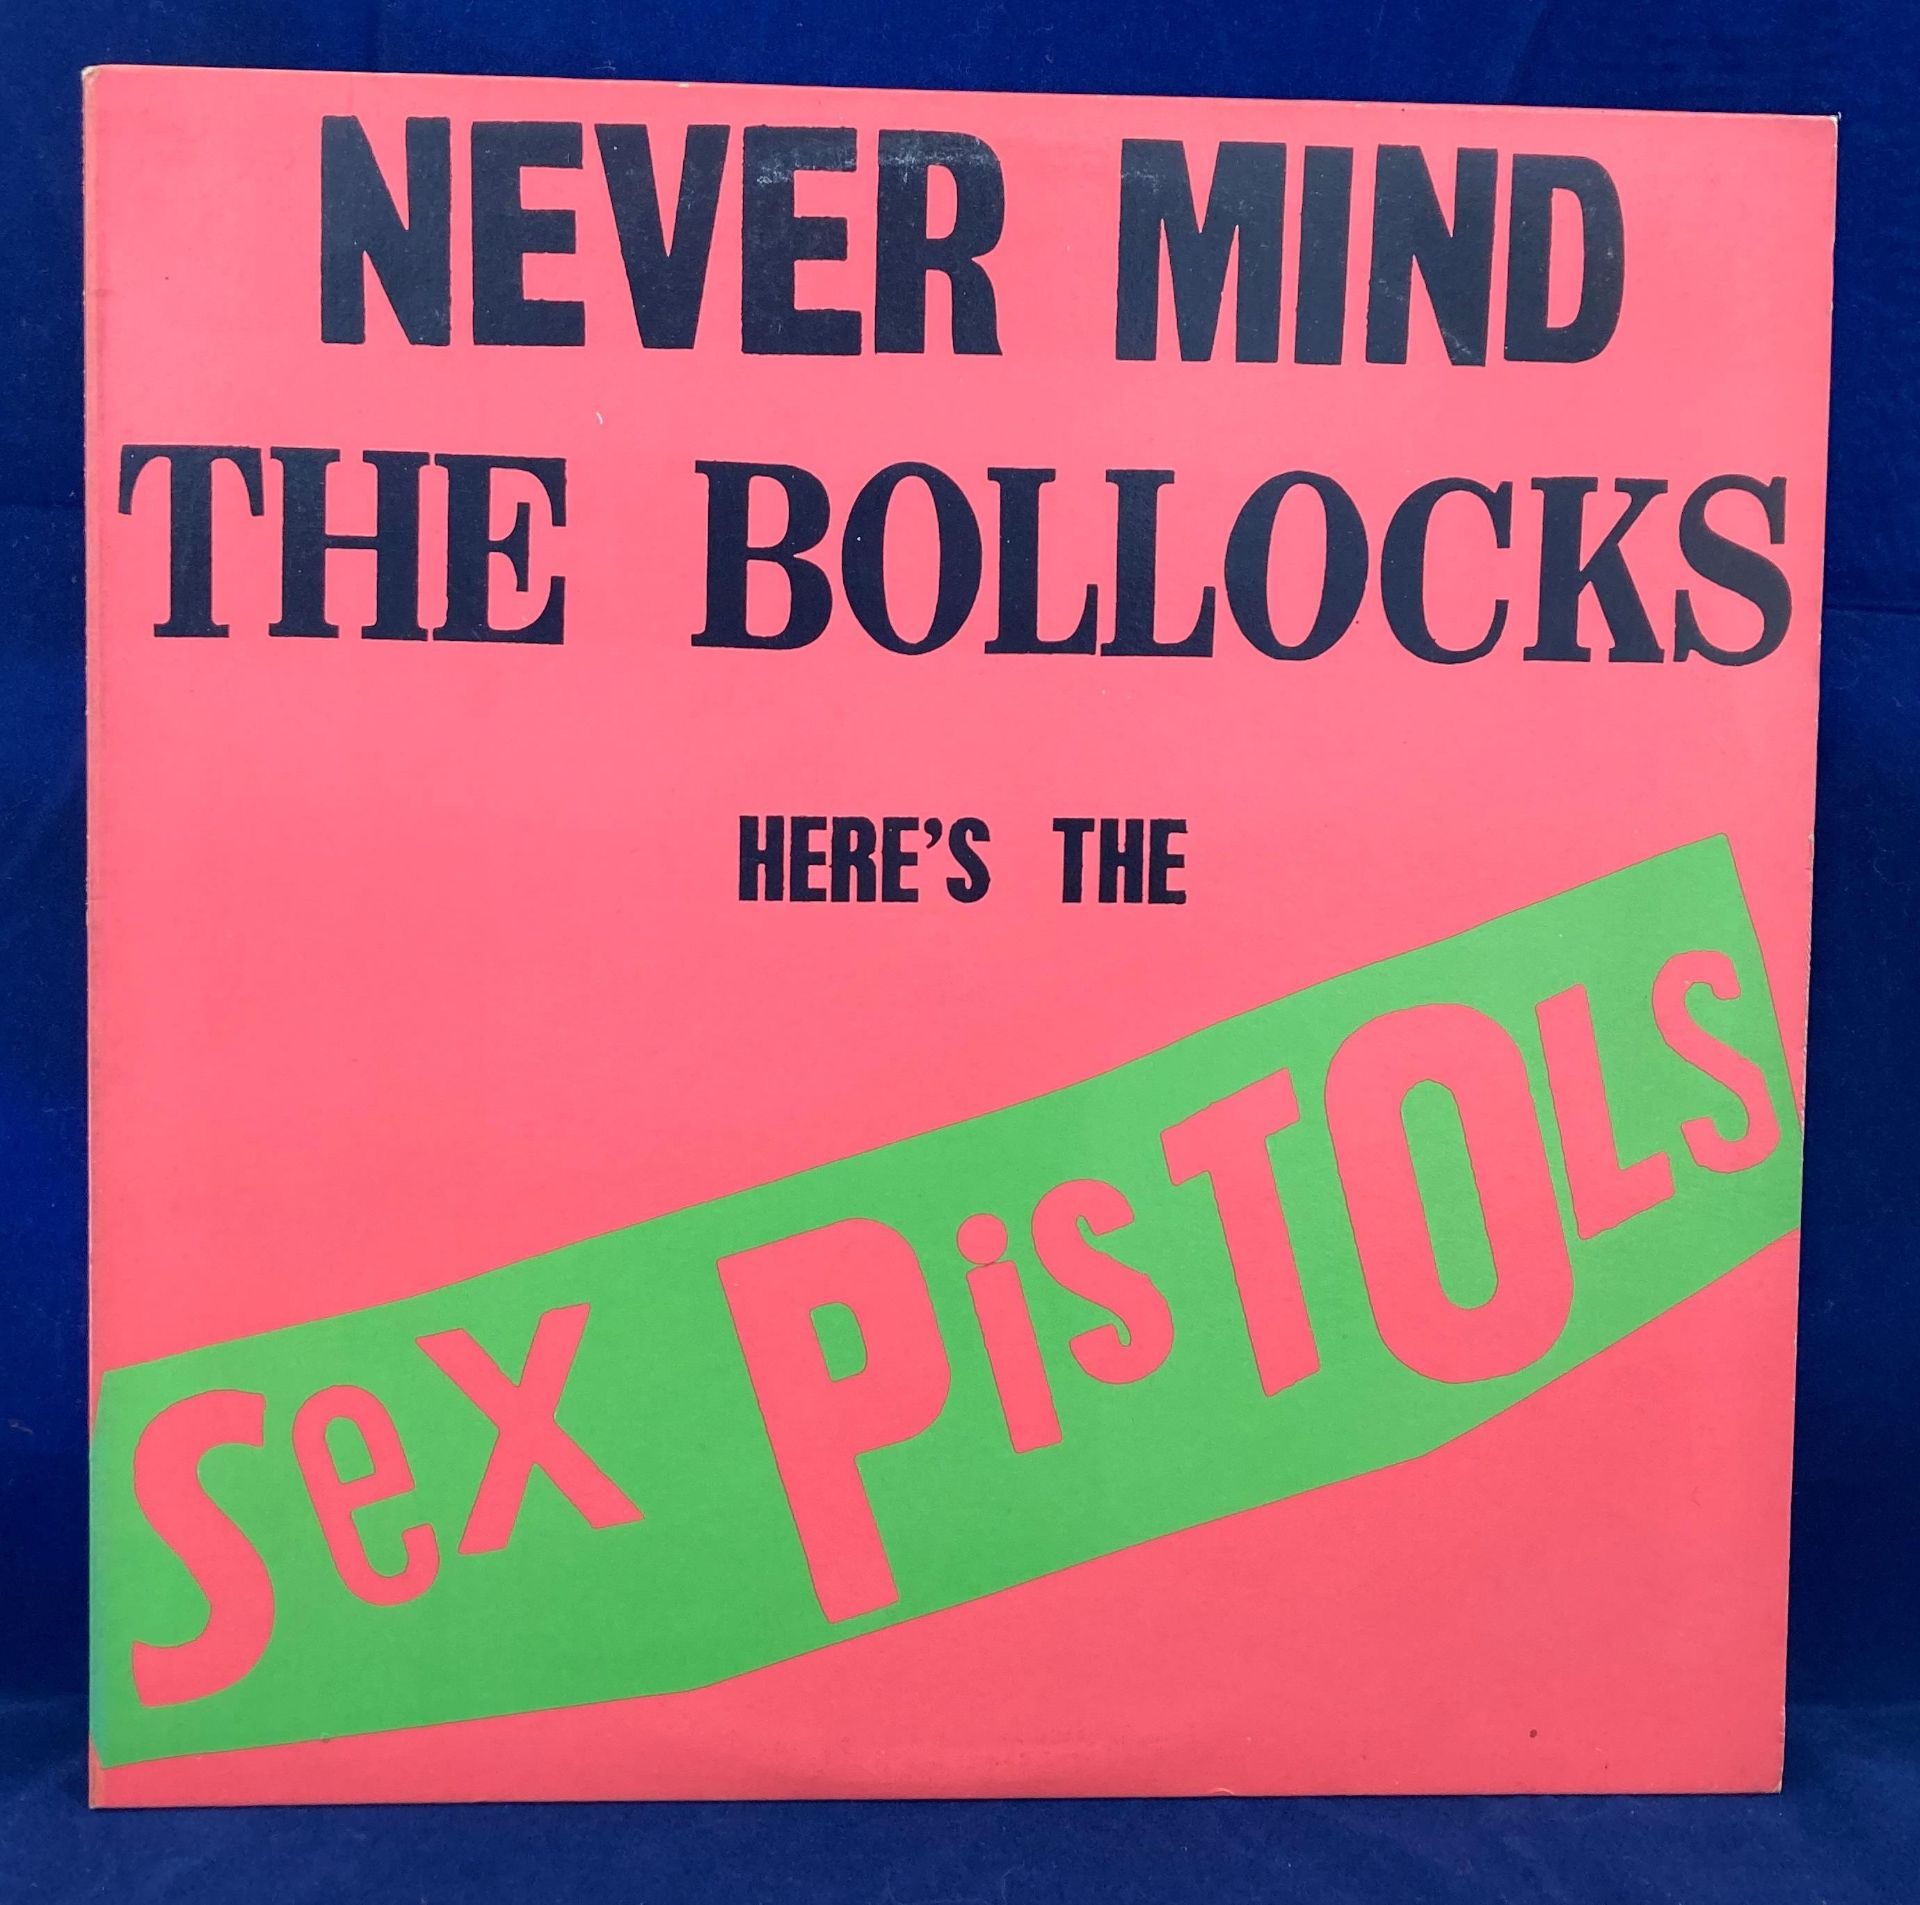 SEX PISTOLS: Never Mind The Bollocks Here's The Sex Pistols, LP, Warner Bros BSK3147, - Image 2 of 20